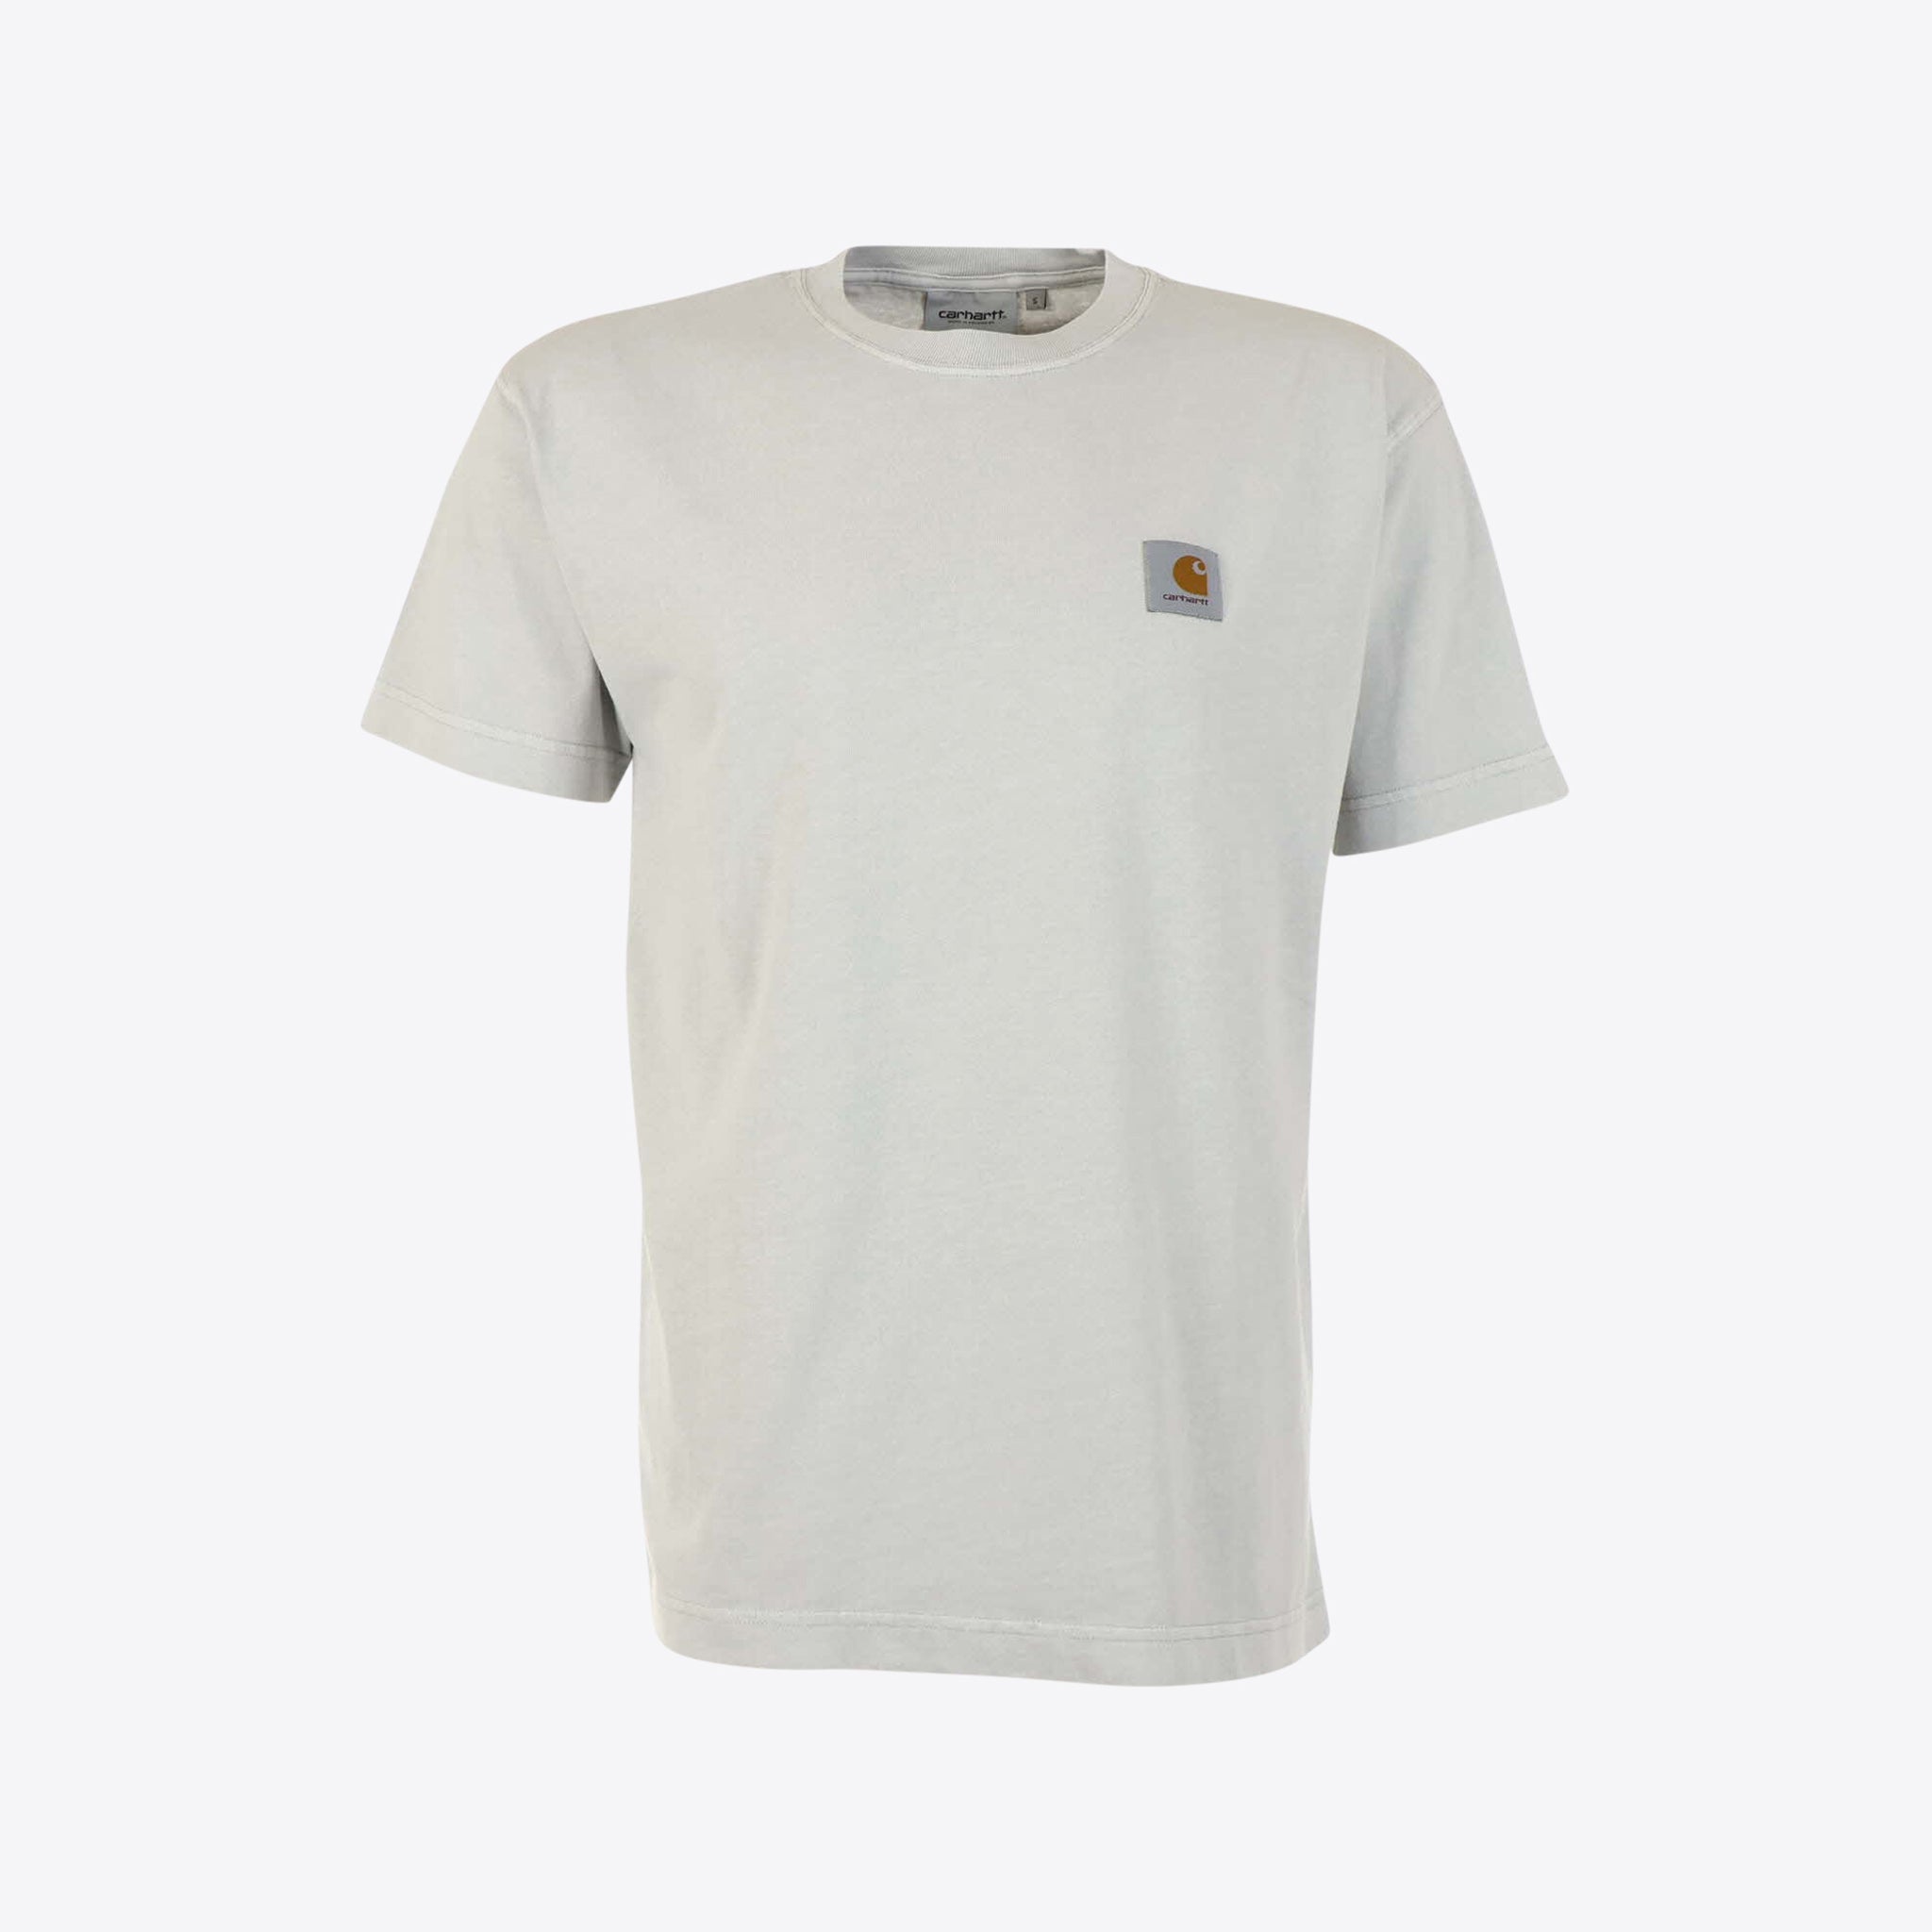 Carhartt Wip T-shirt Grijs Wash